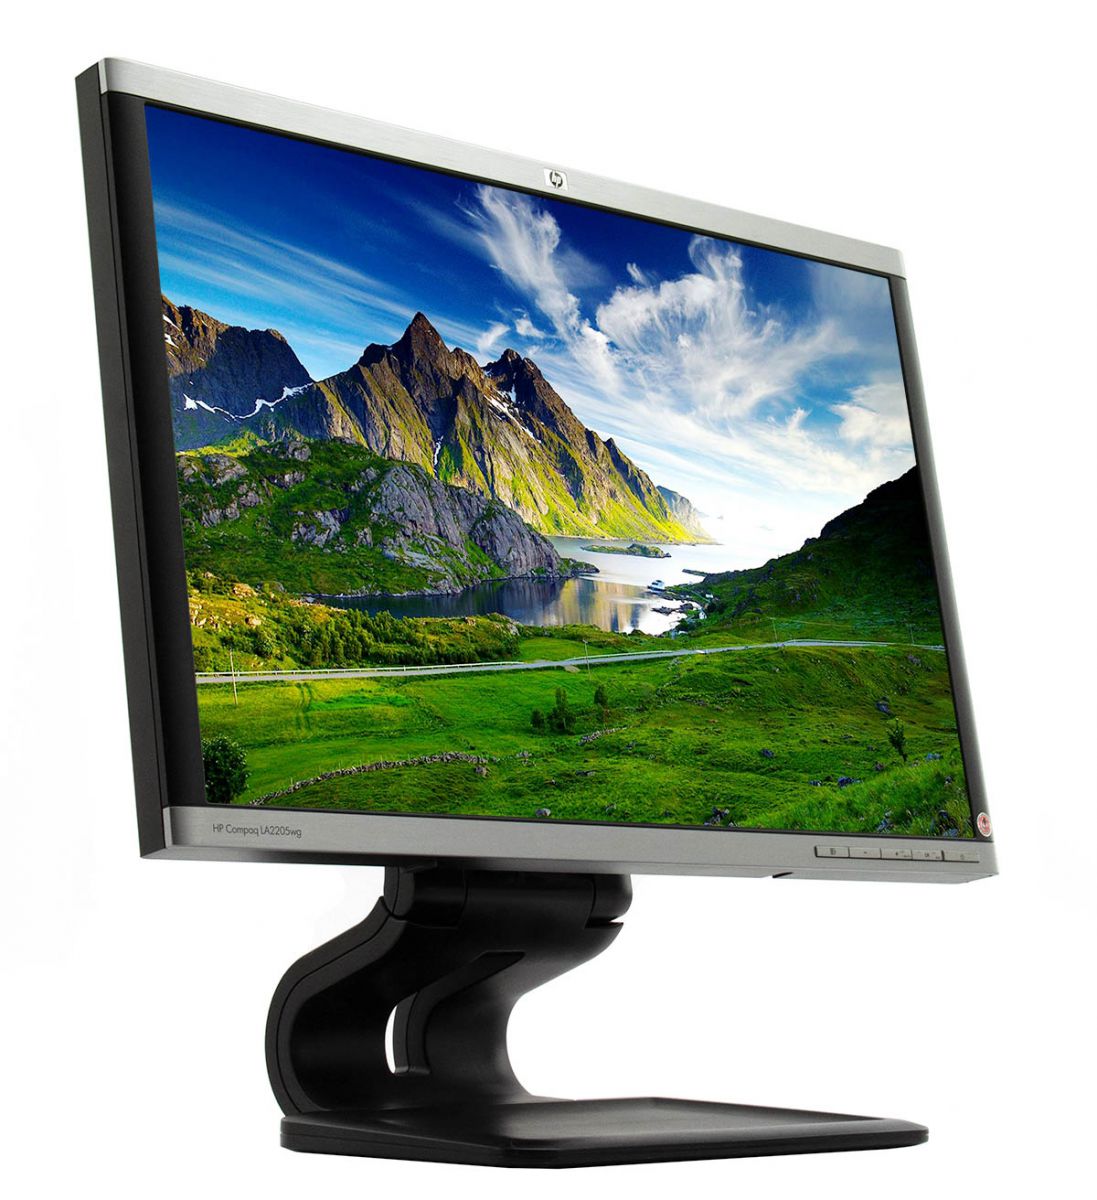 HP LA2205wg LCD Monitor